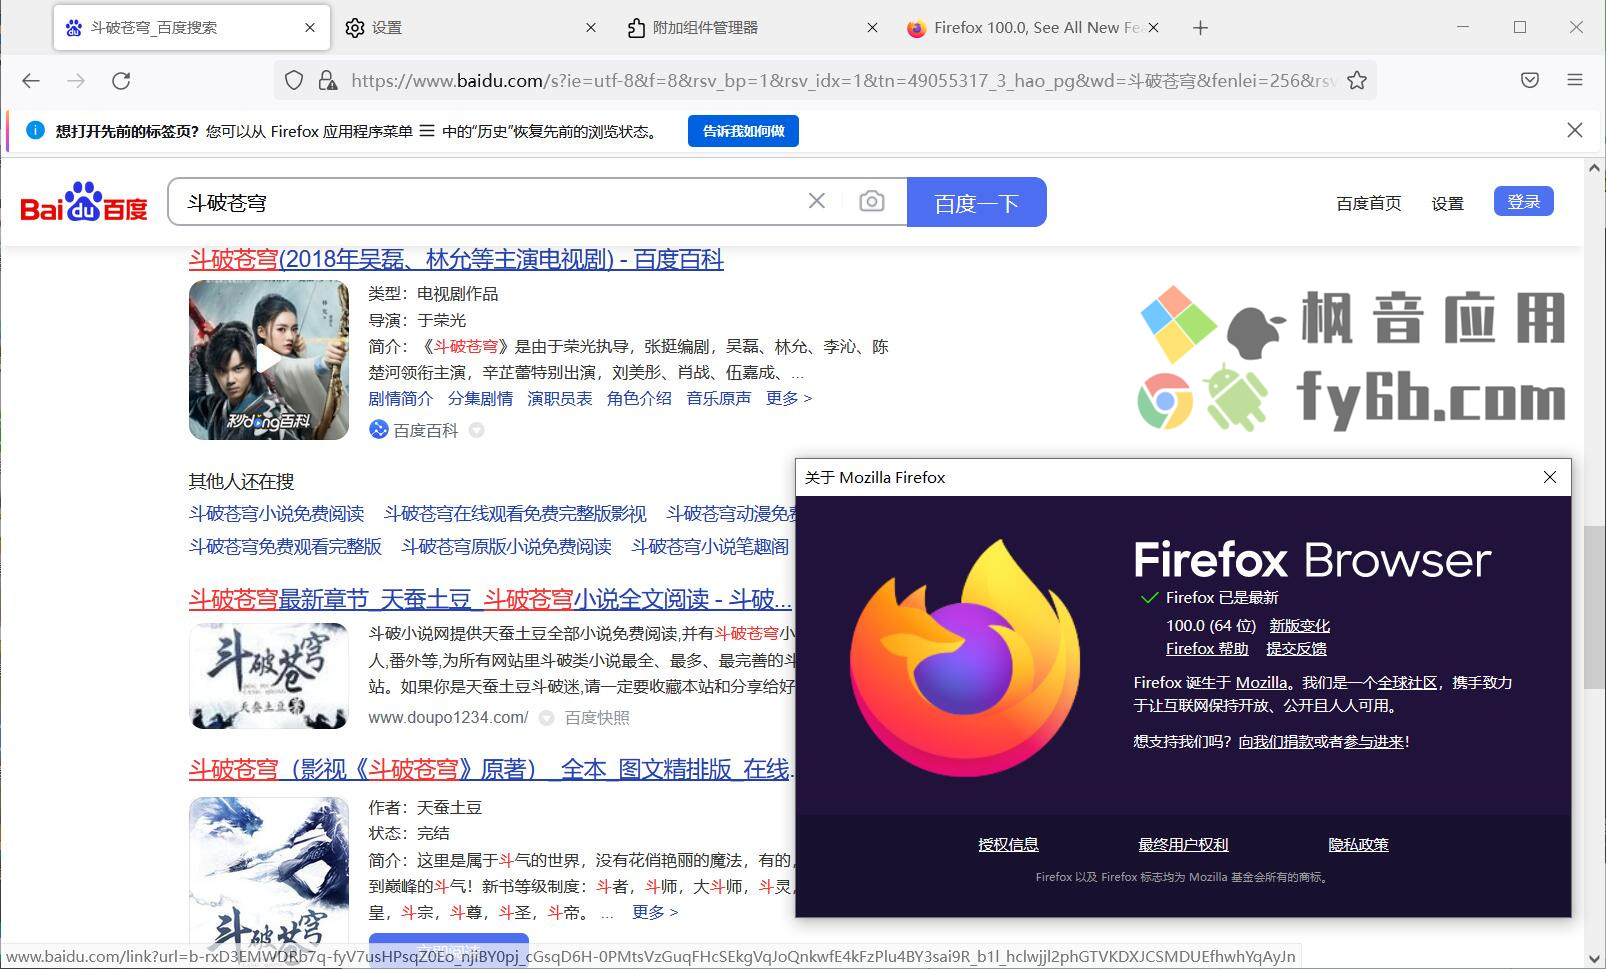 Windows 火狐浏览器 Firefox v100.0 正式版